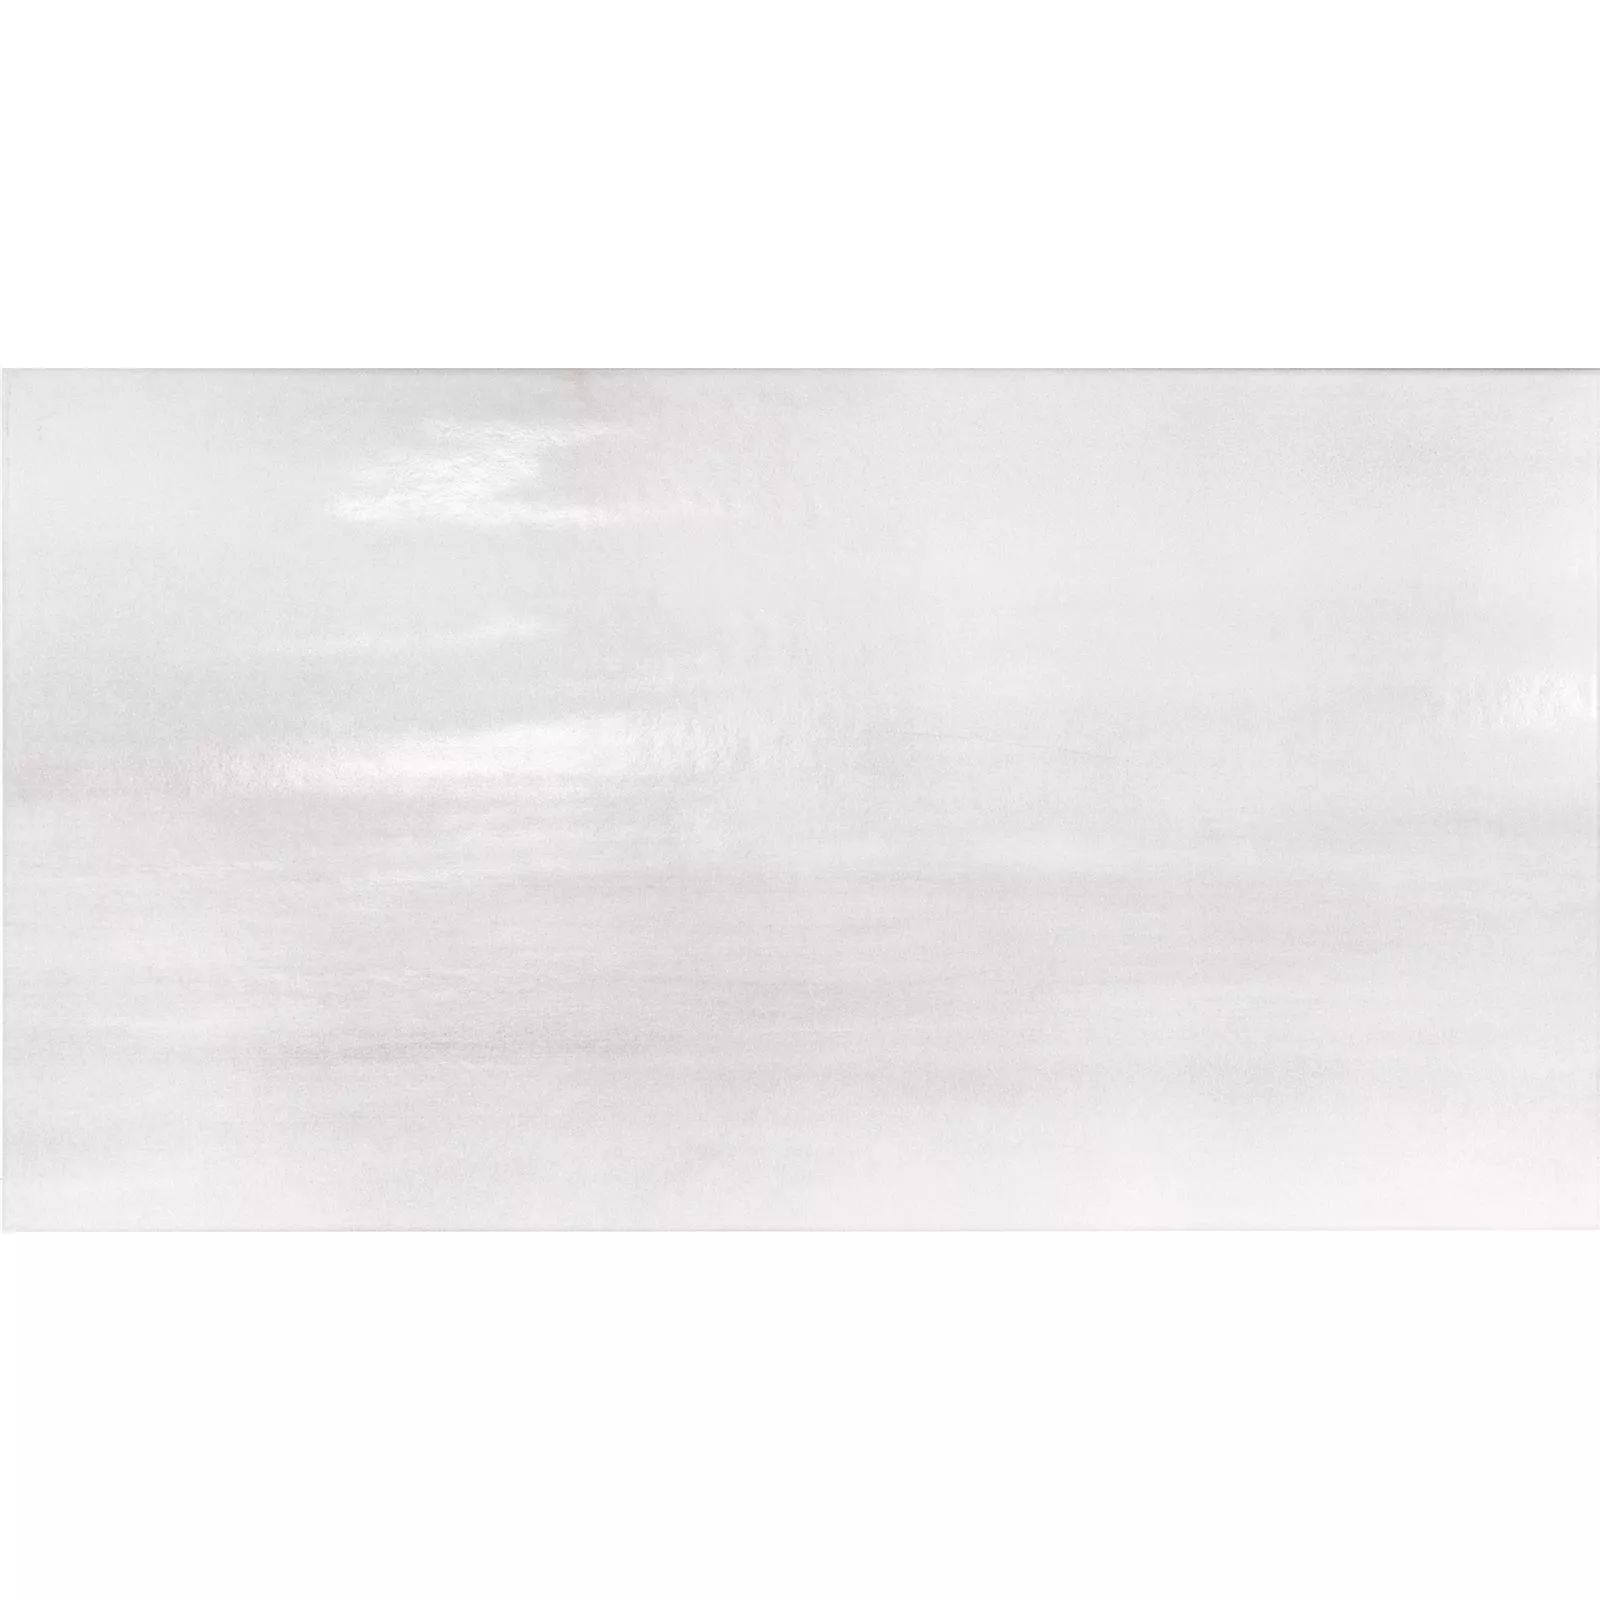 Vzorek Nástěnné Obklady Friedrich Kamenný mat Bílá 30x60cm